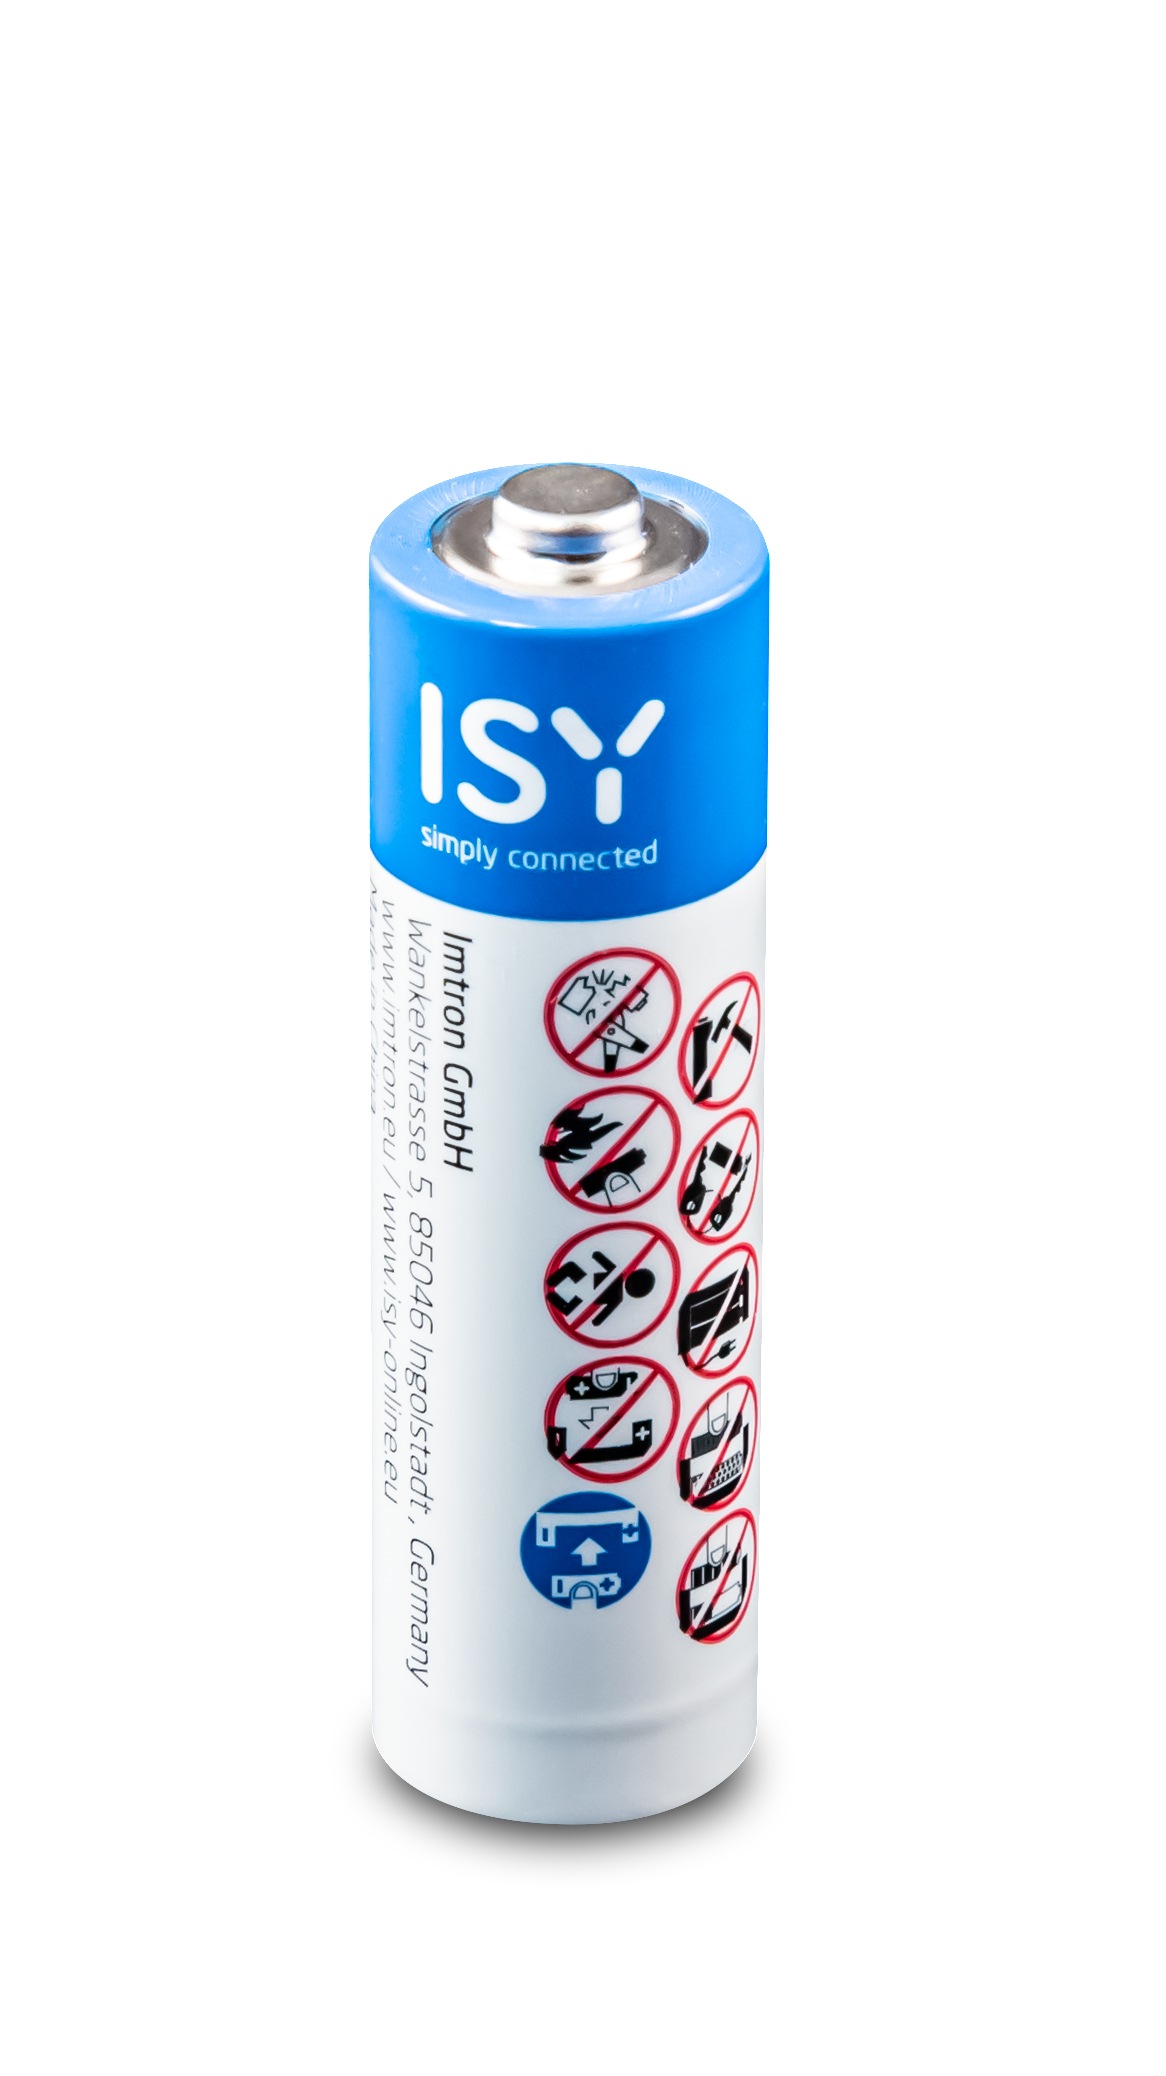 1.5 Batterie, Volt ISY 50 IBA-2050 AA Stück